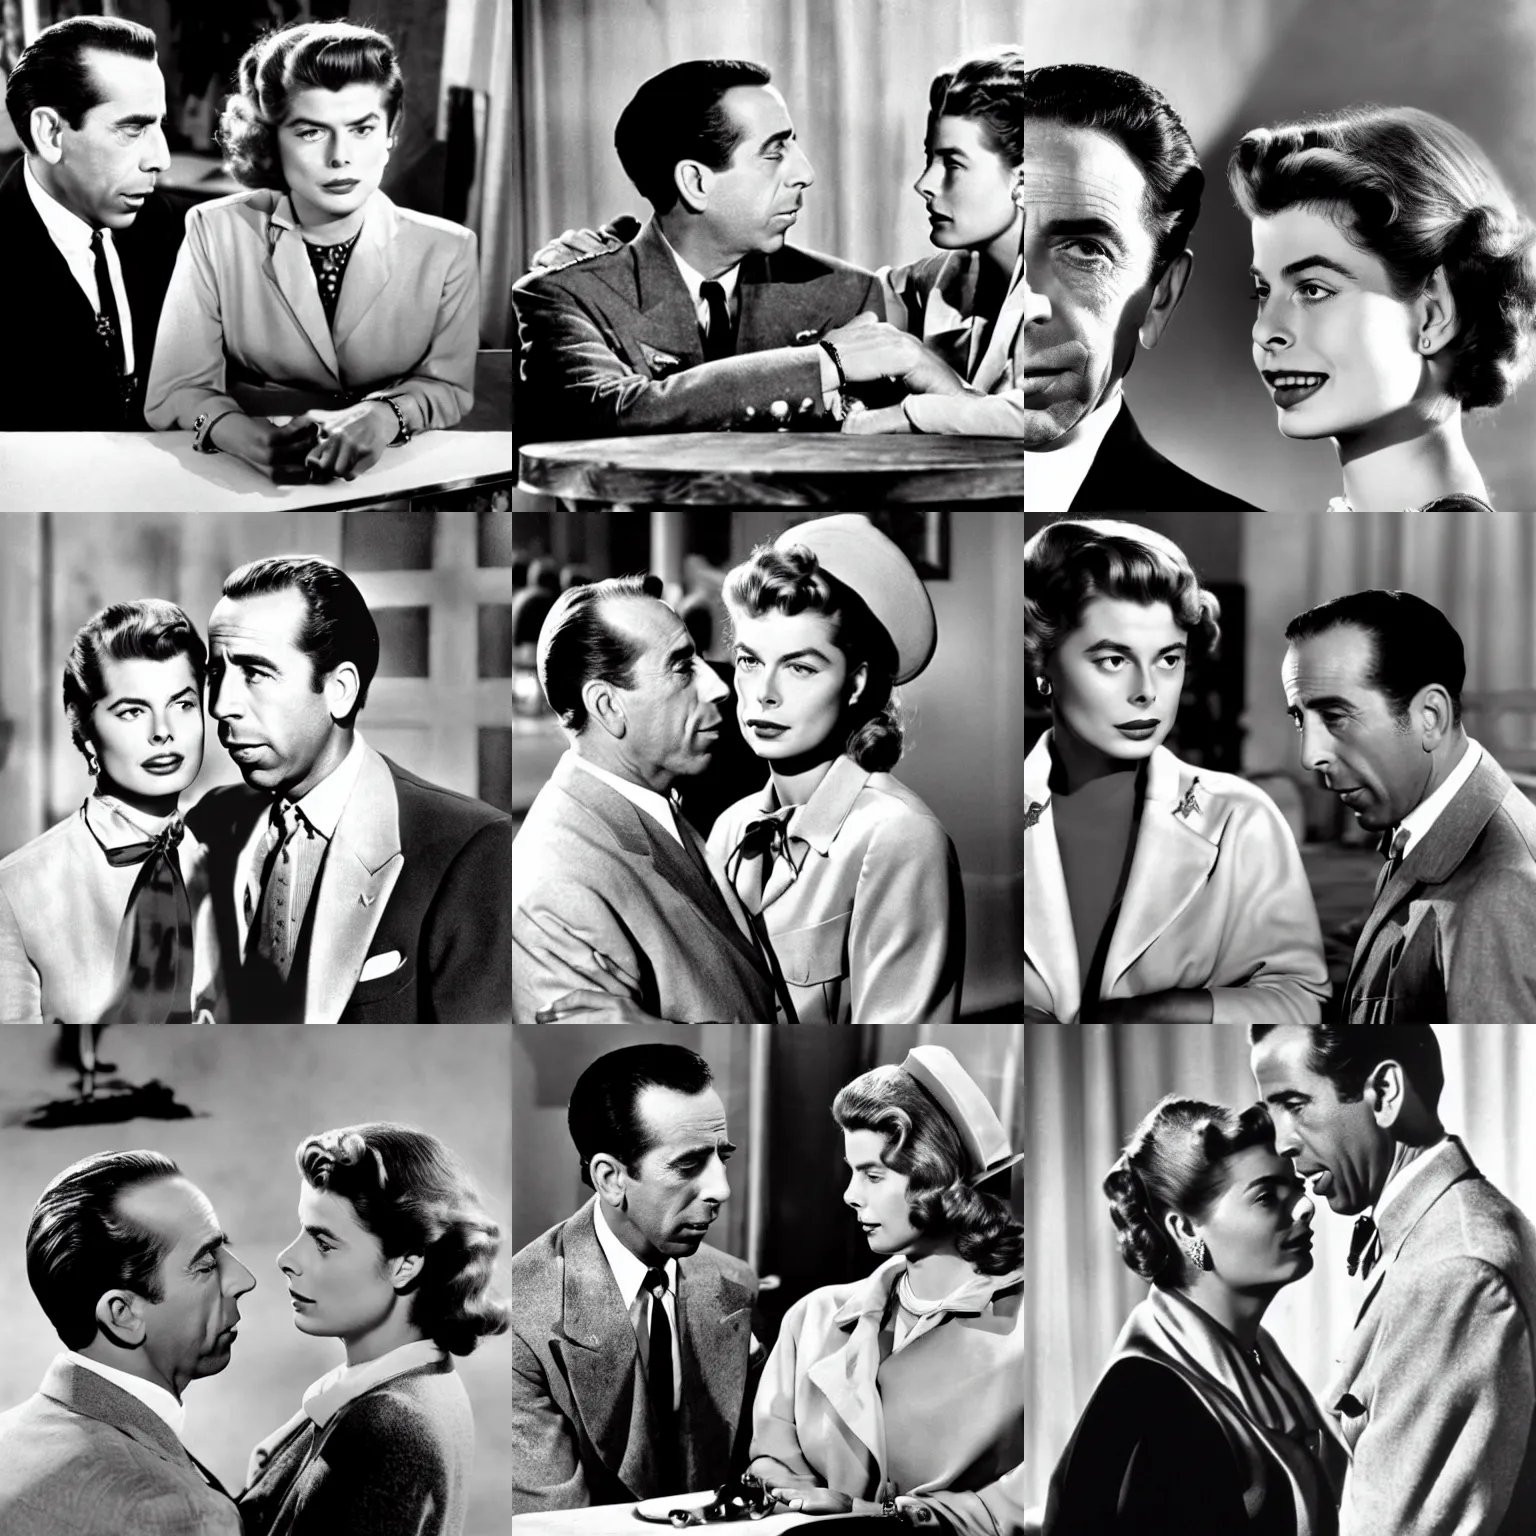 Prompt: Humphrey Bogart and Ingrid Bergman in Casablanca, movie still